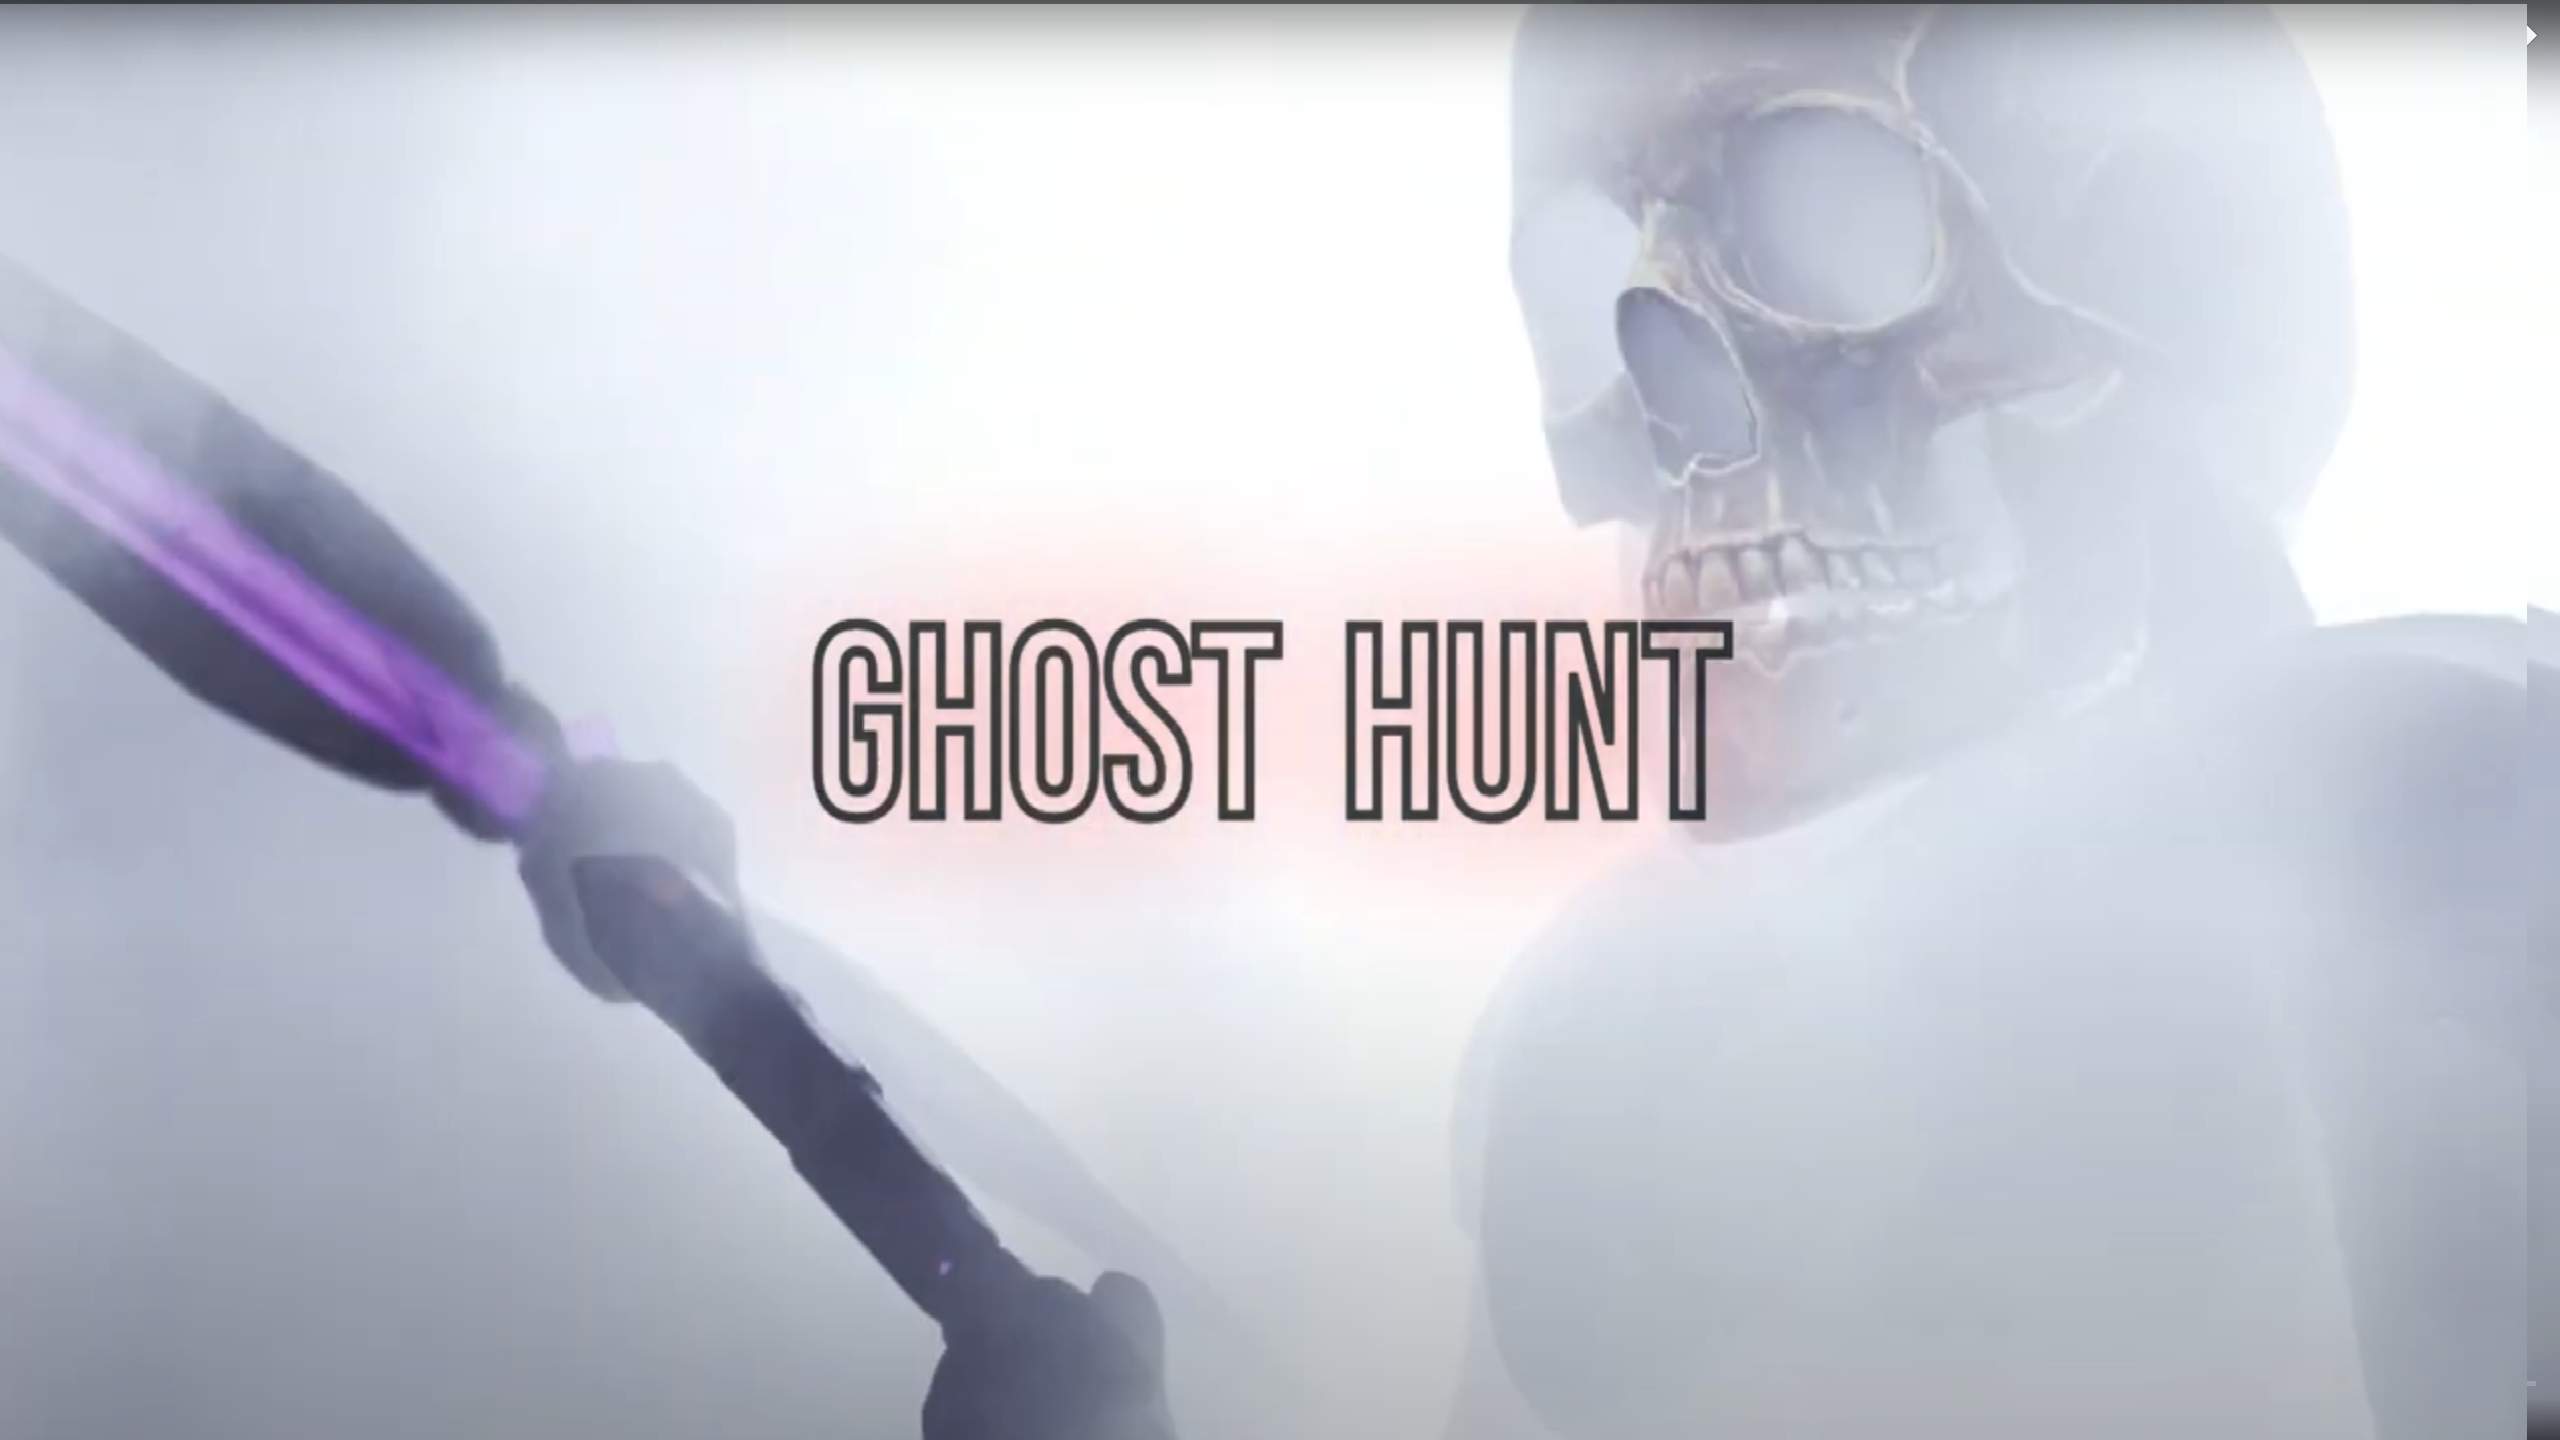 Ghost Hunt image 3